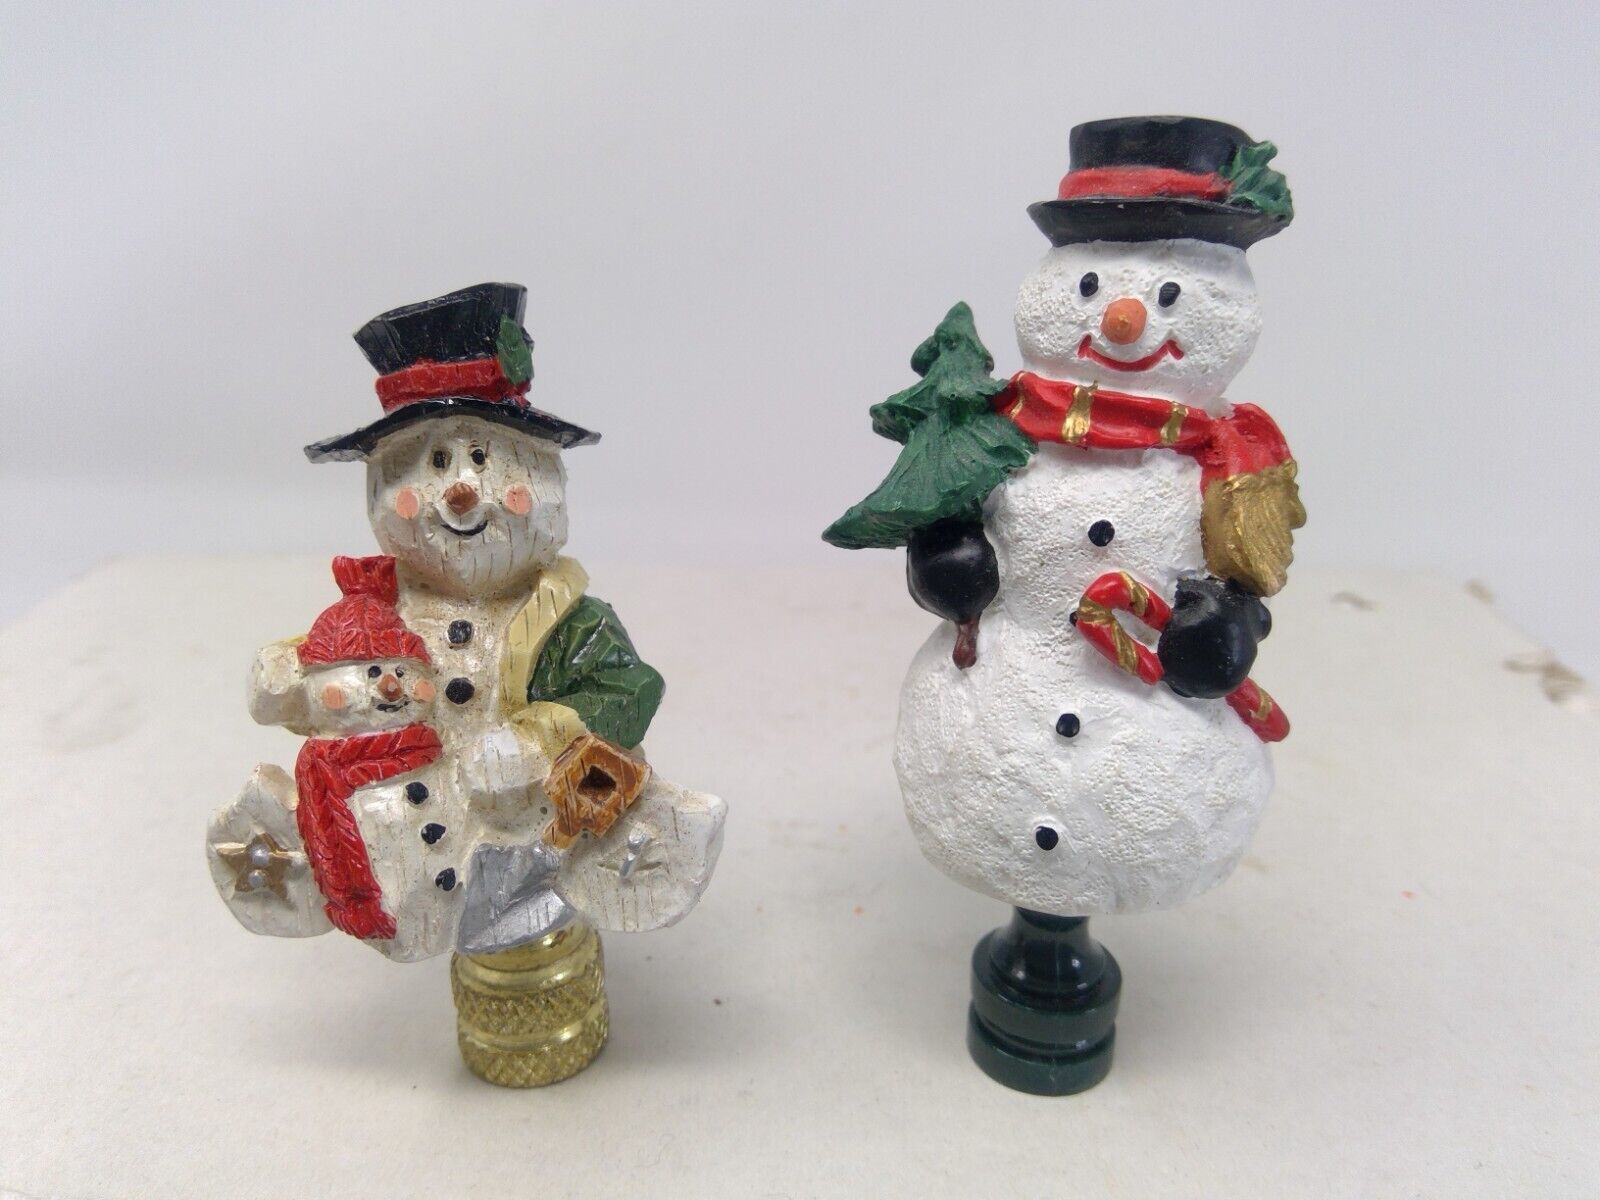 Pair of Christmas Resin Lamp Finials - Snowman